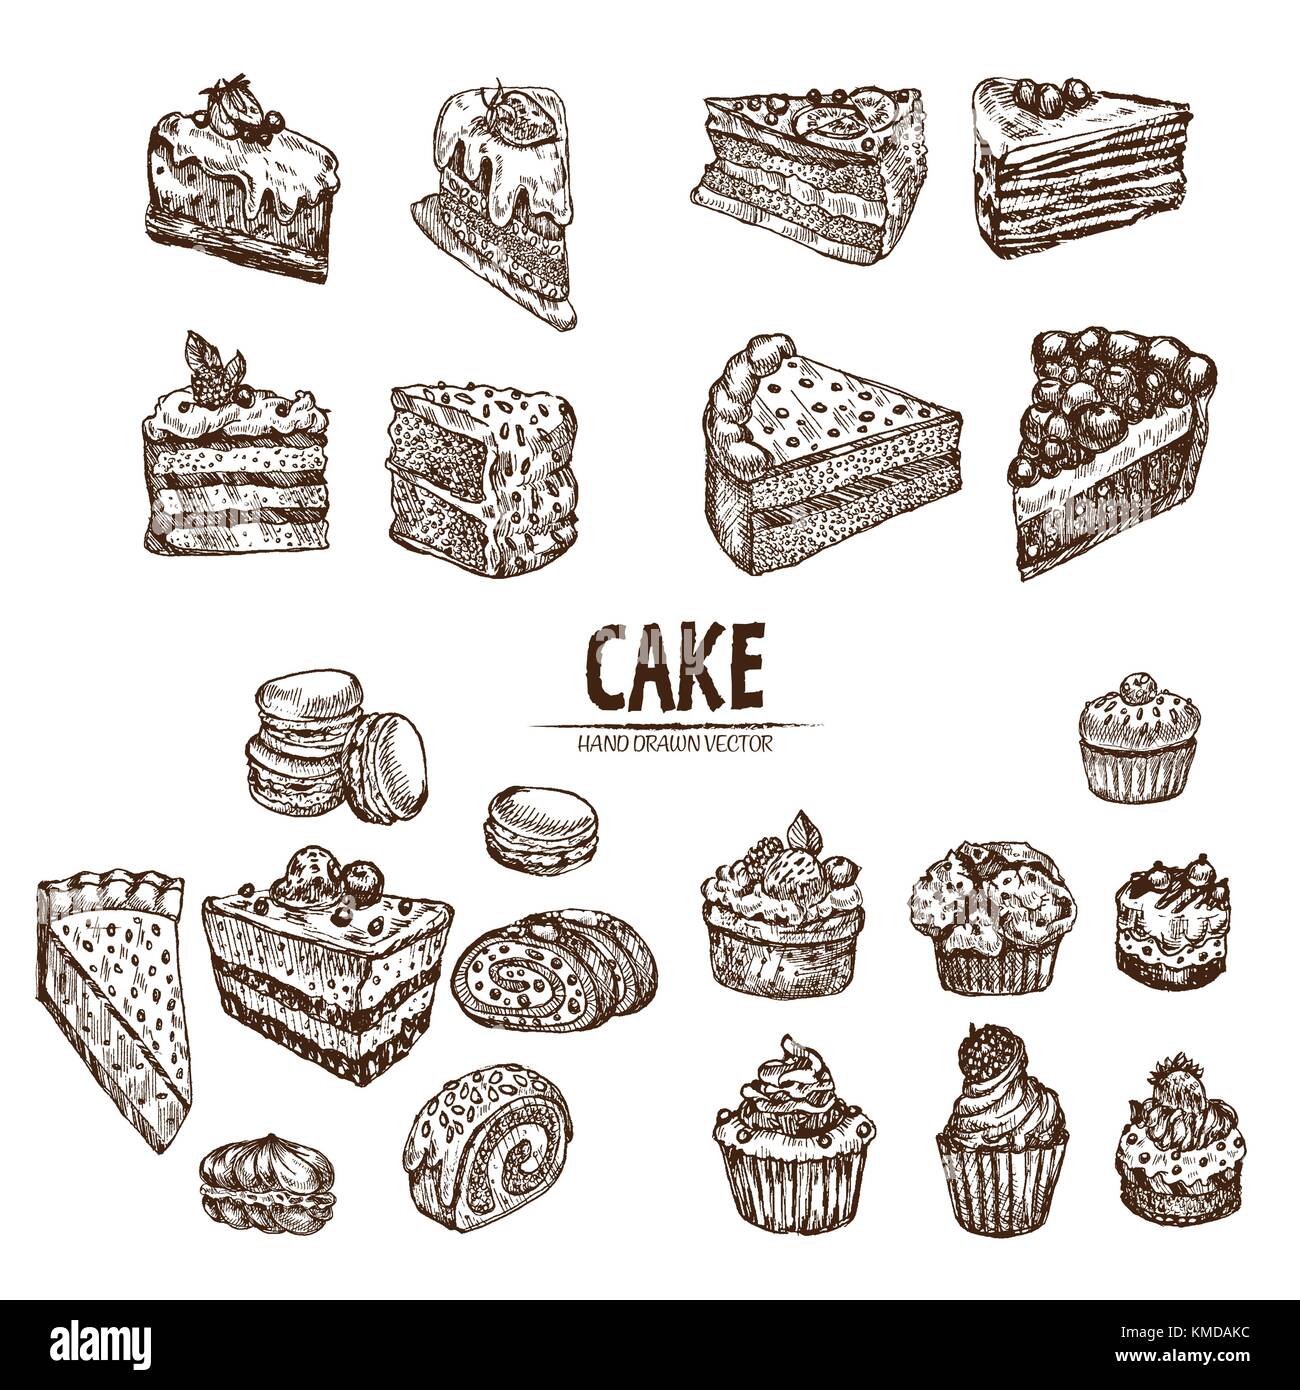 240 Clip Art Of Draw A Birthday Cake Illustrations RoyaltyFree Vector  Graphics  Clip Art  iStock